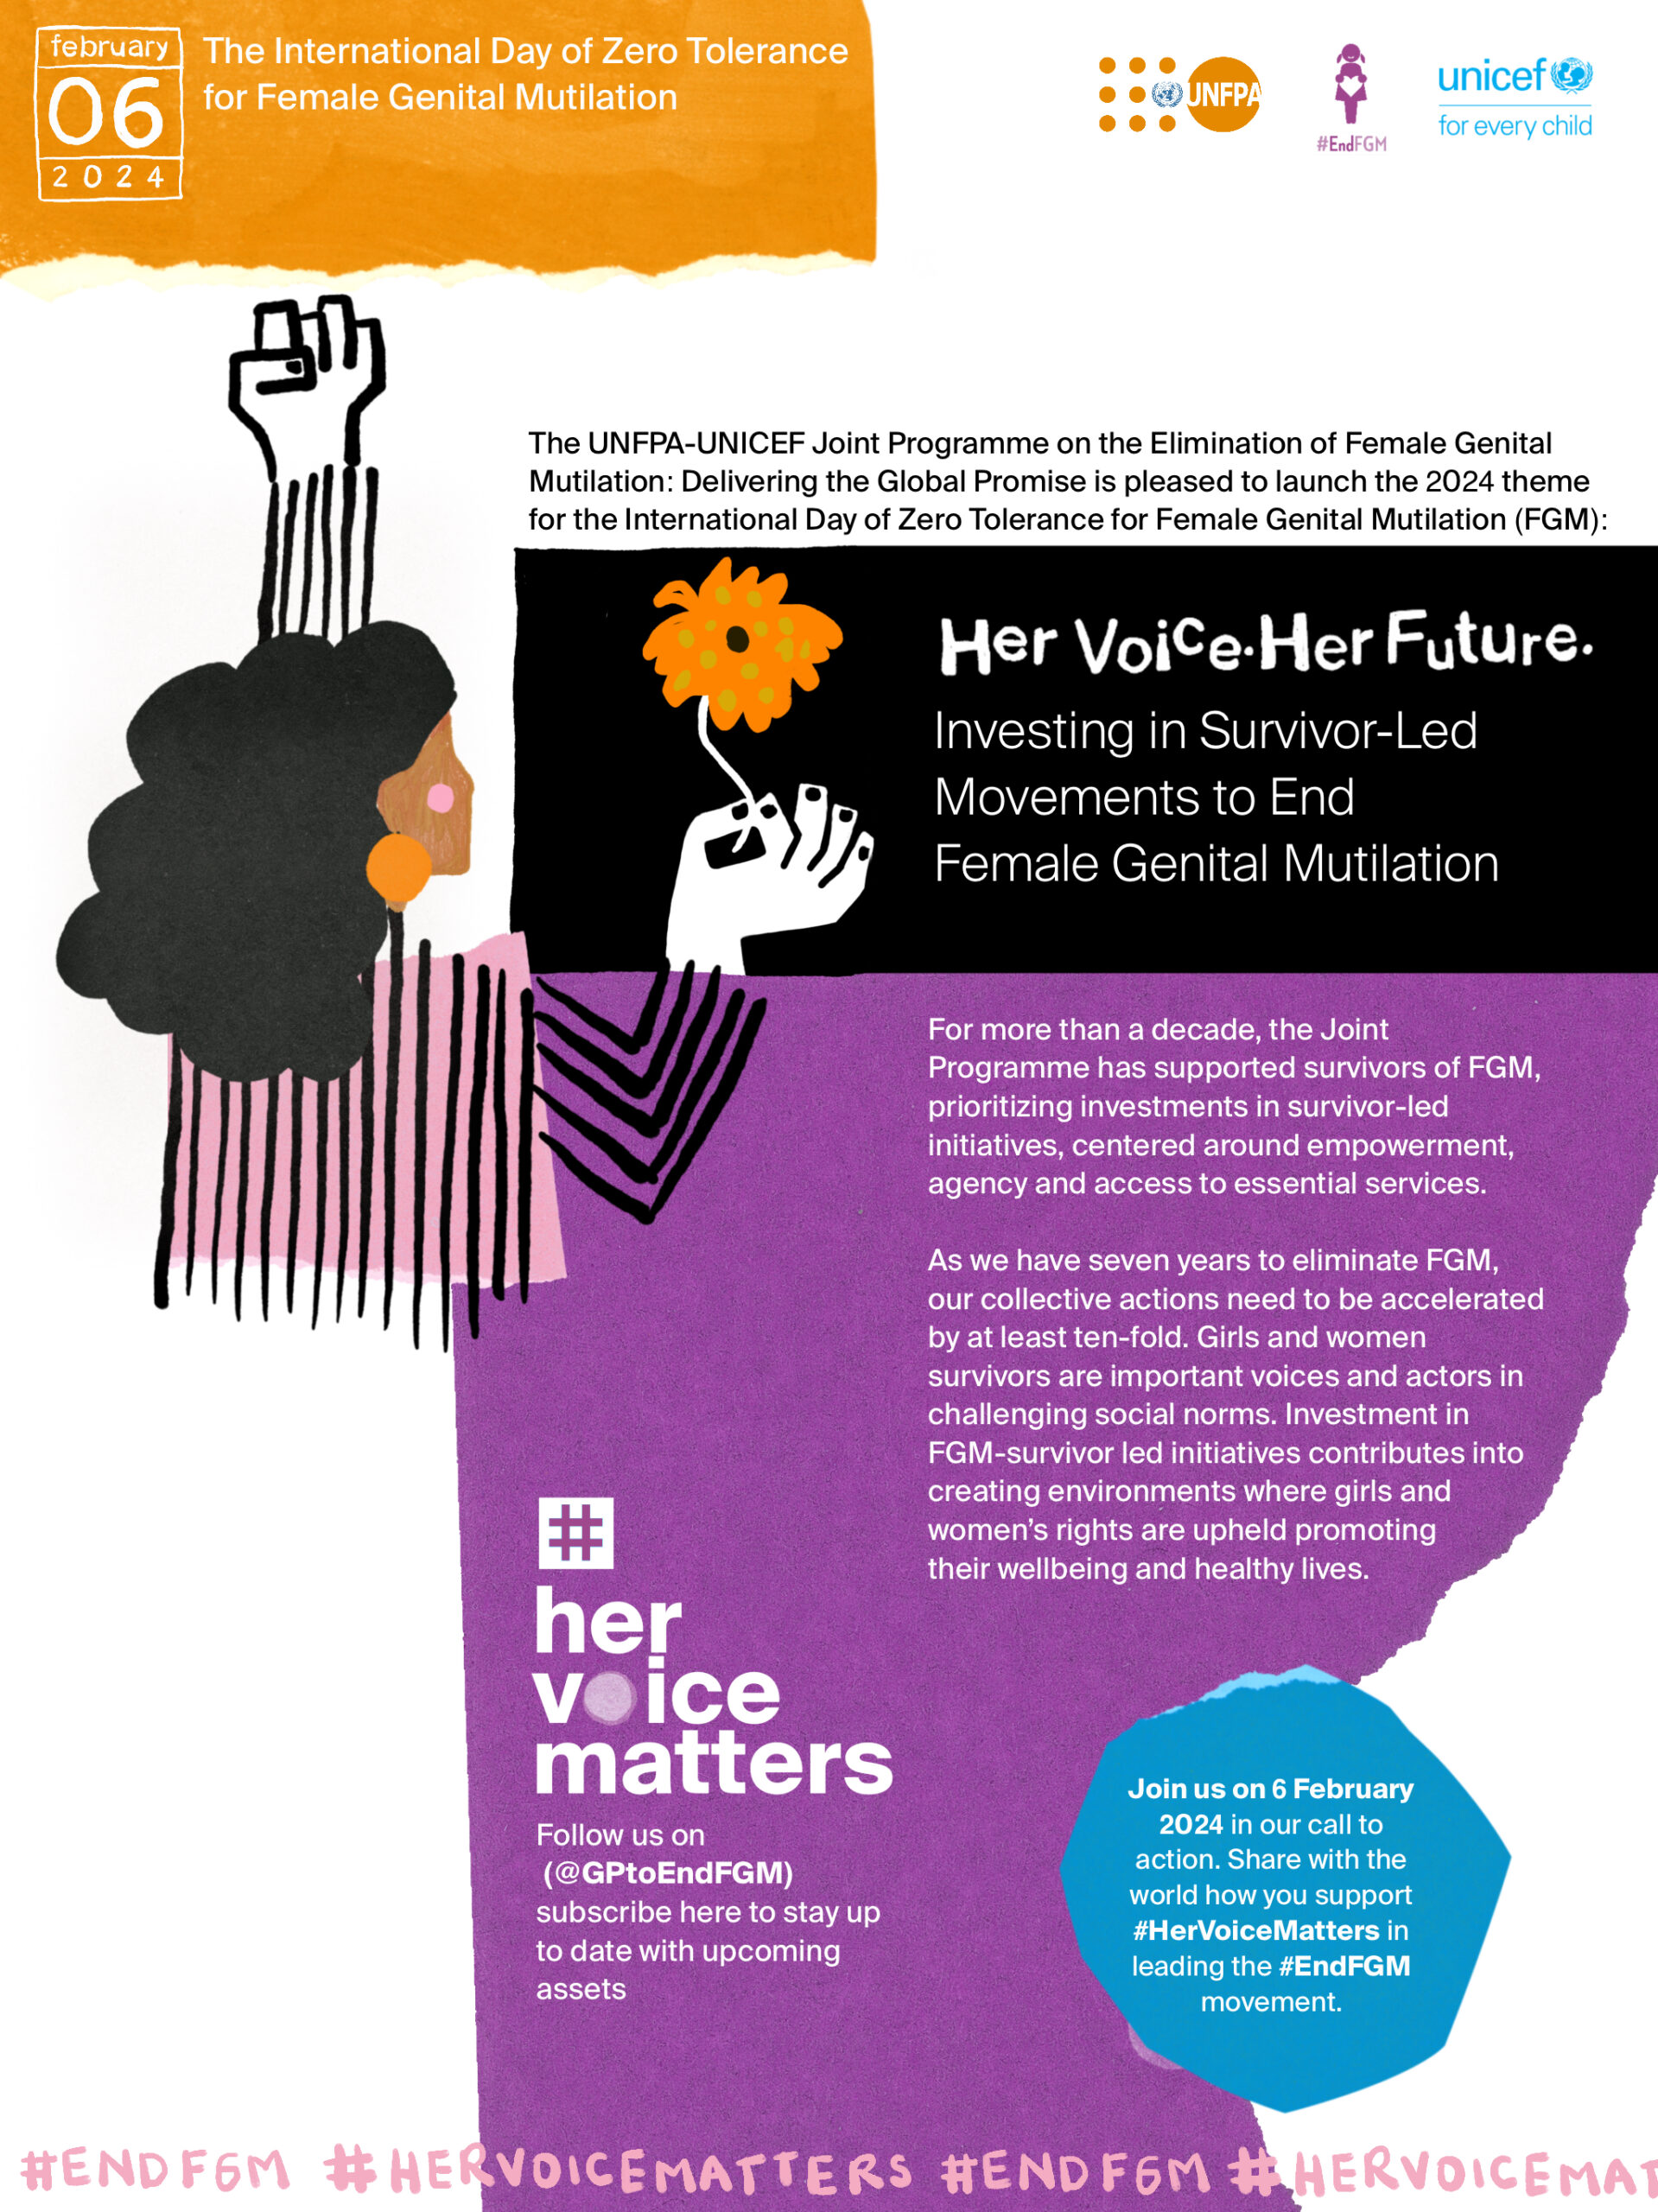 International Day of Zero Tolerance to Female Genital Mutilation: Her Voice. Her Future